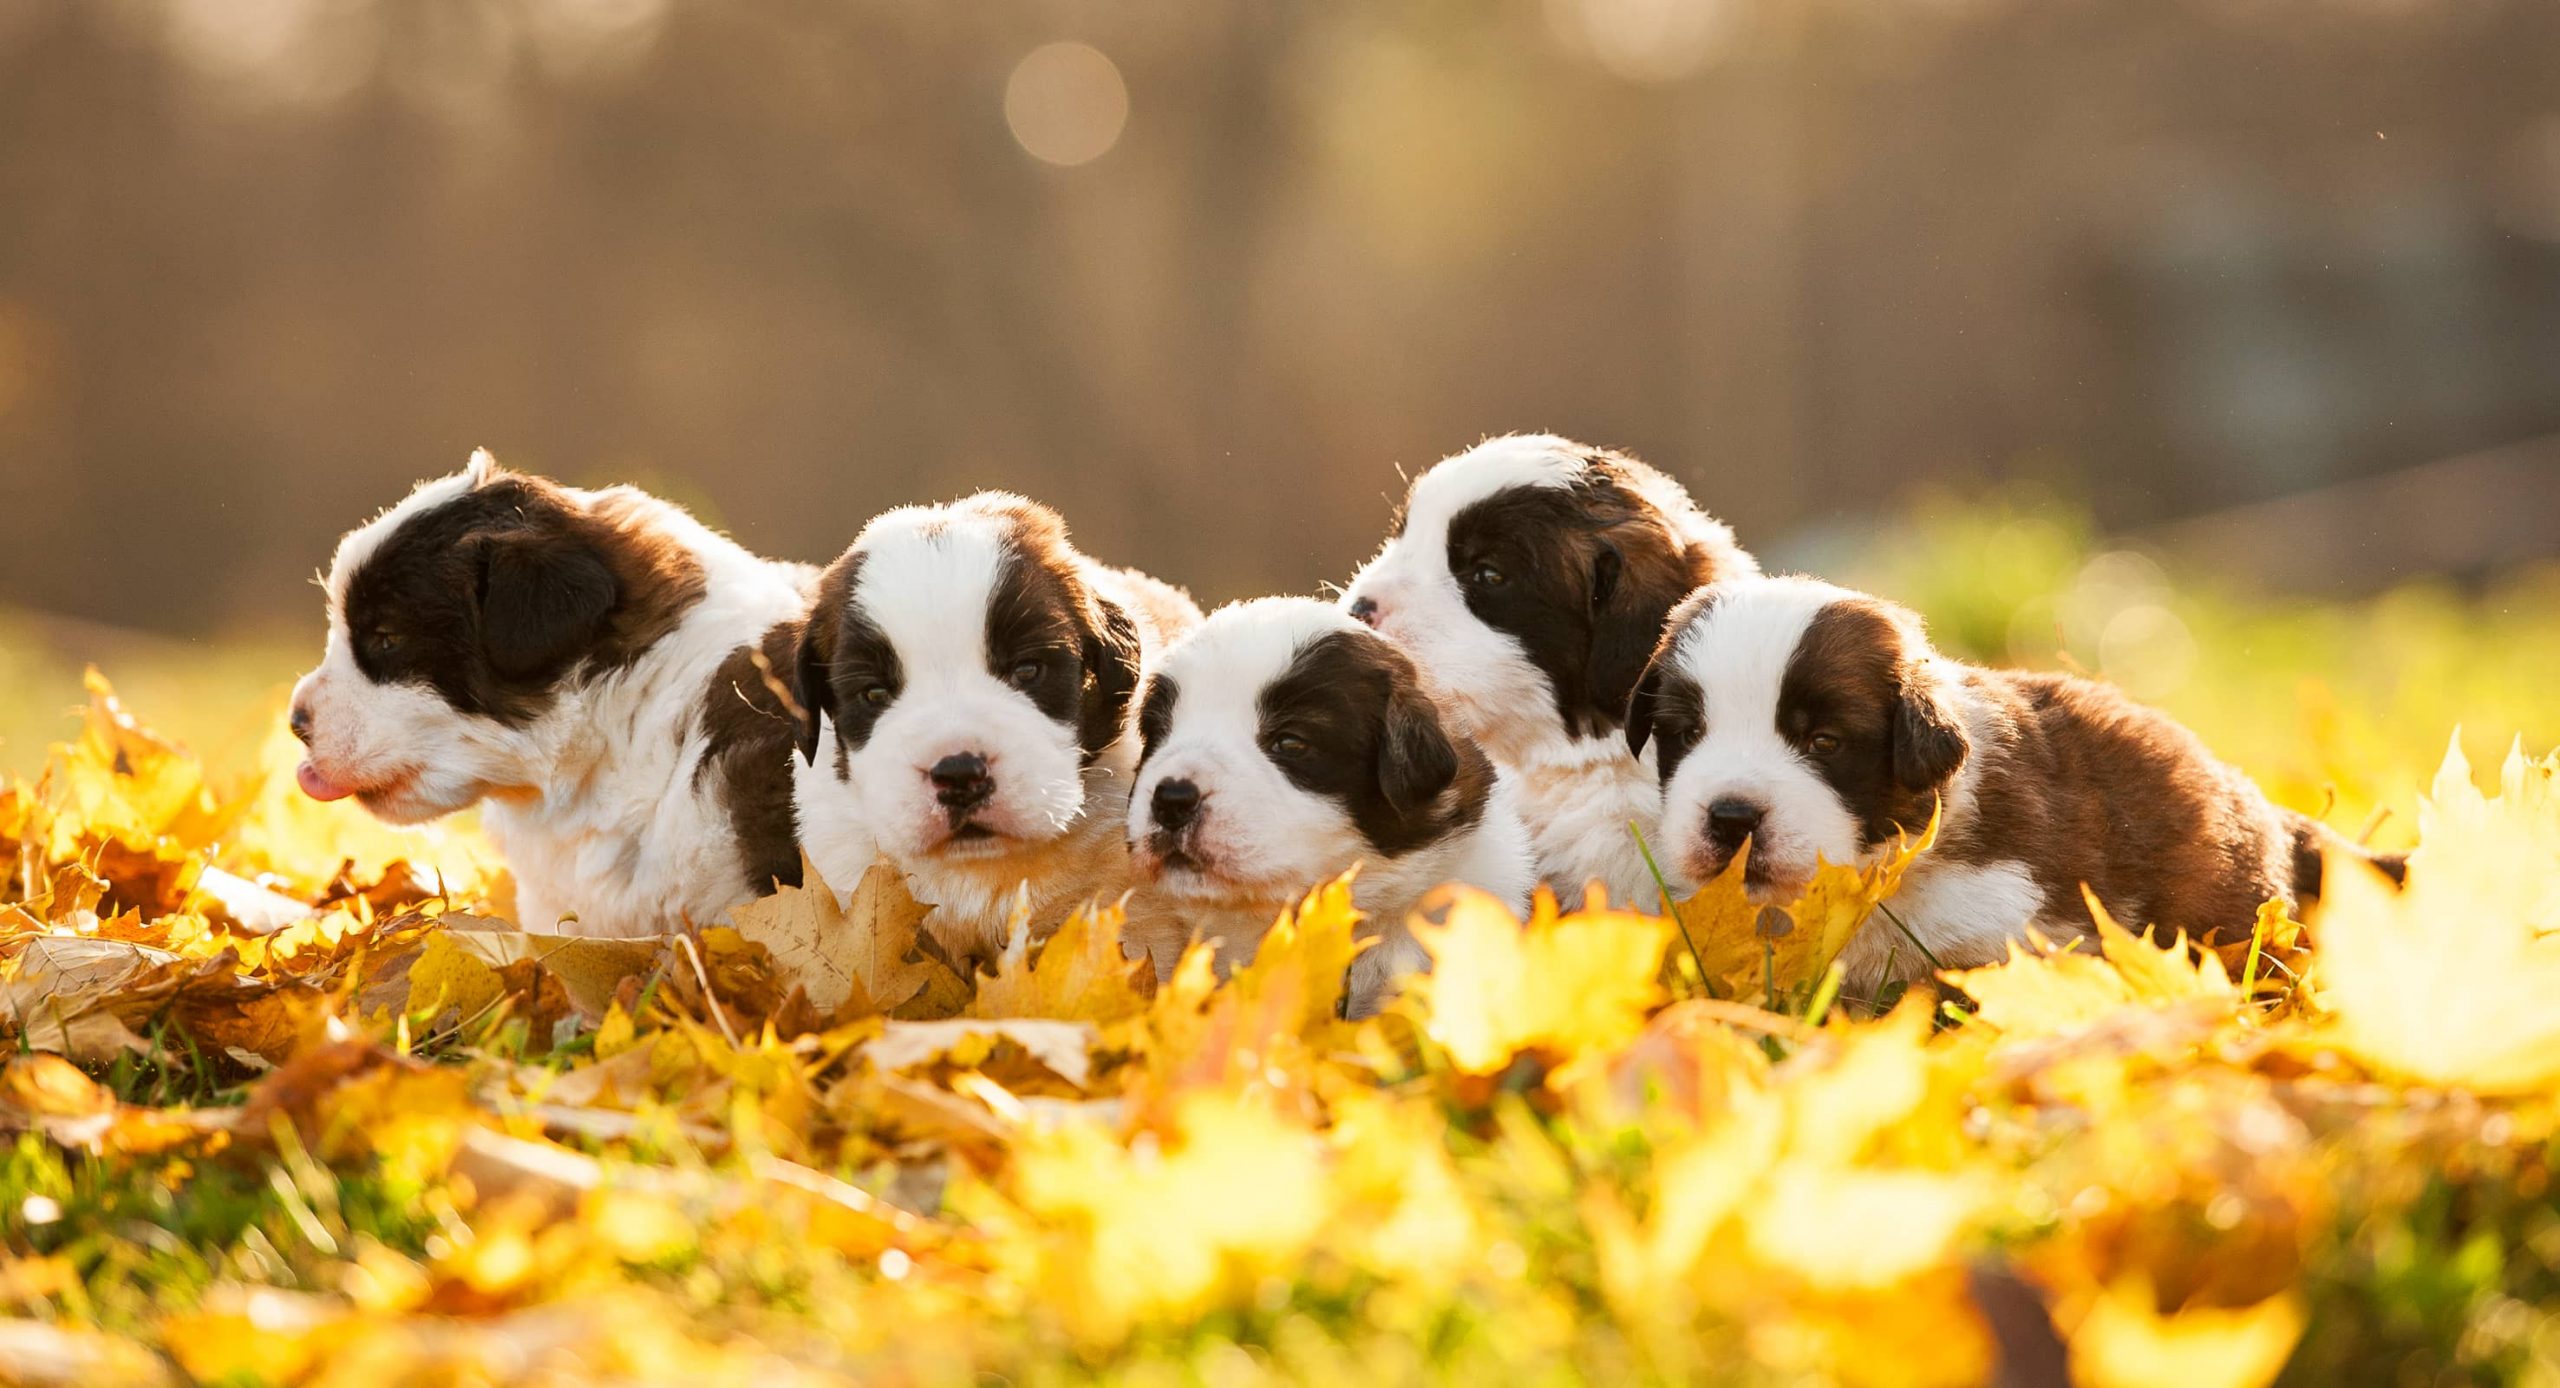 Saint Bernard Puppies for Sale - Greenfield Puppies